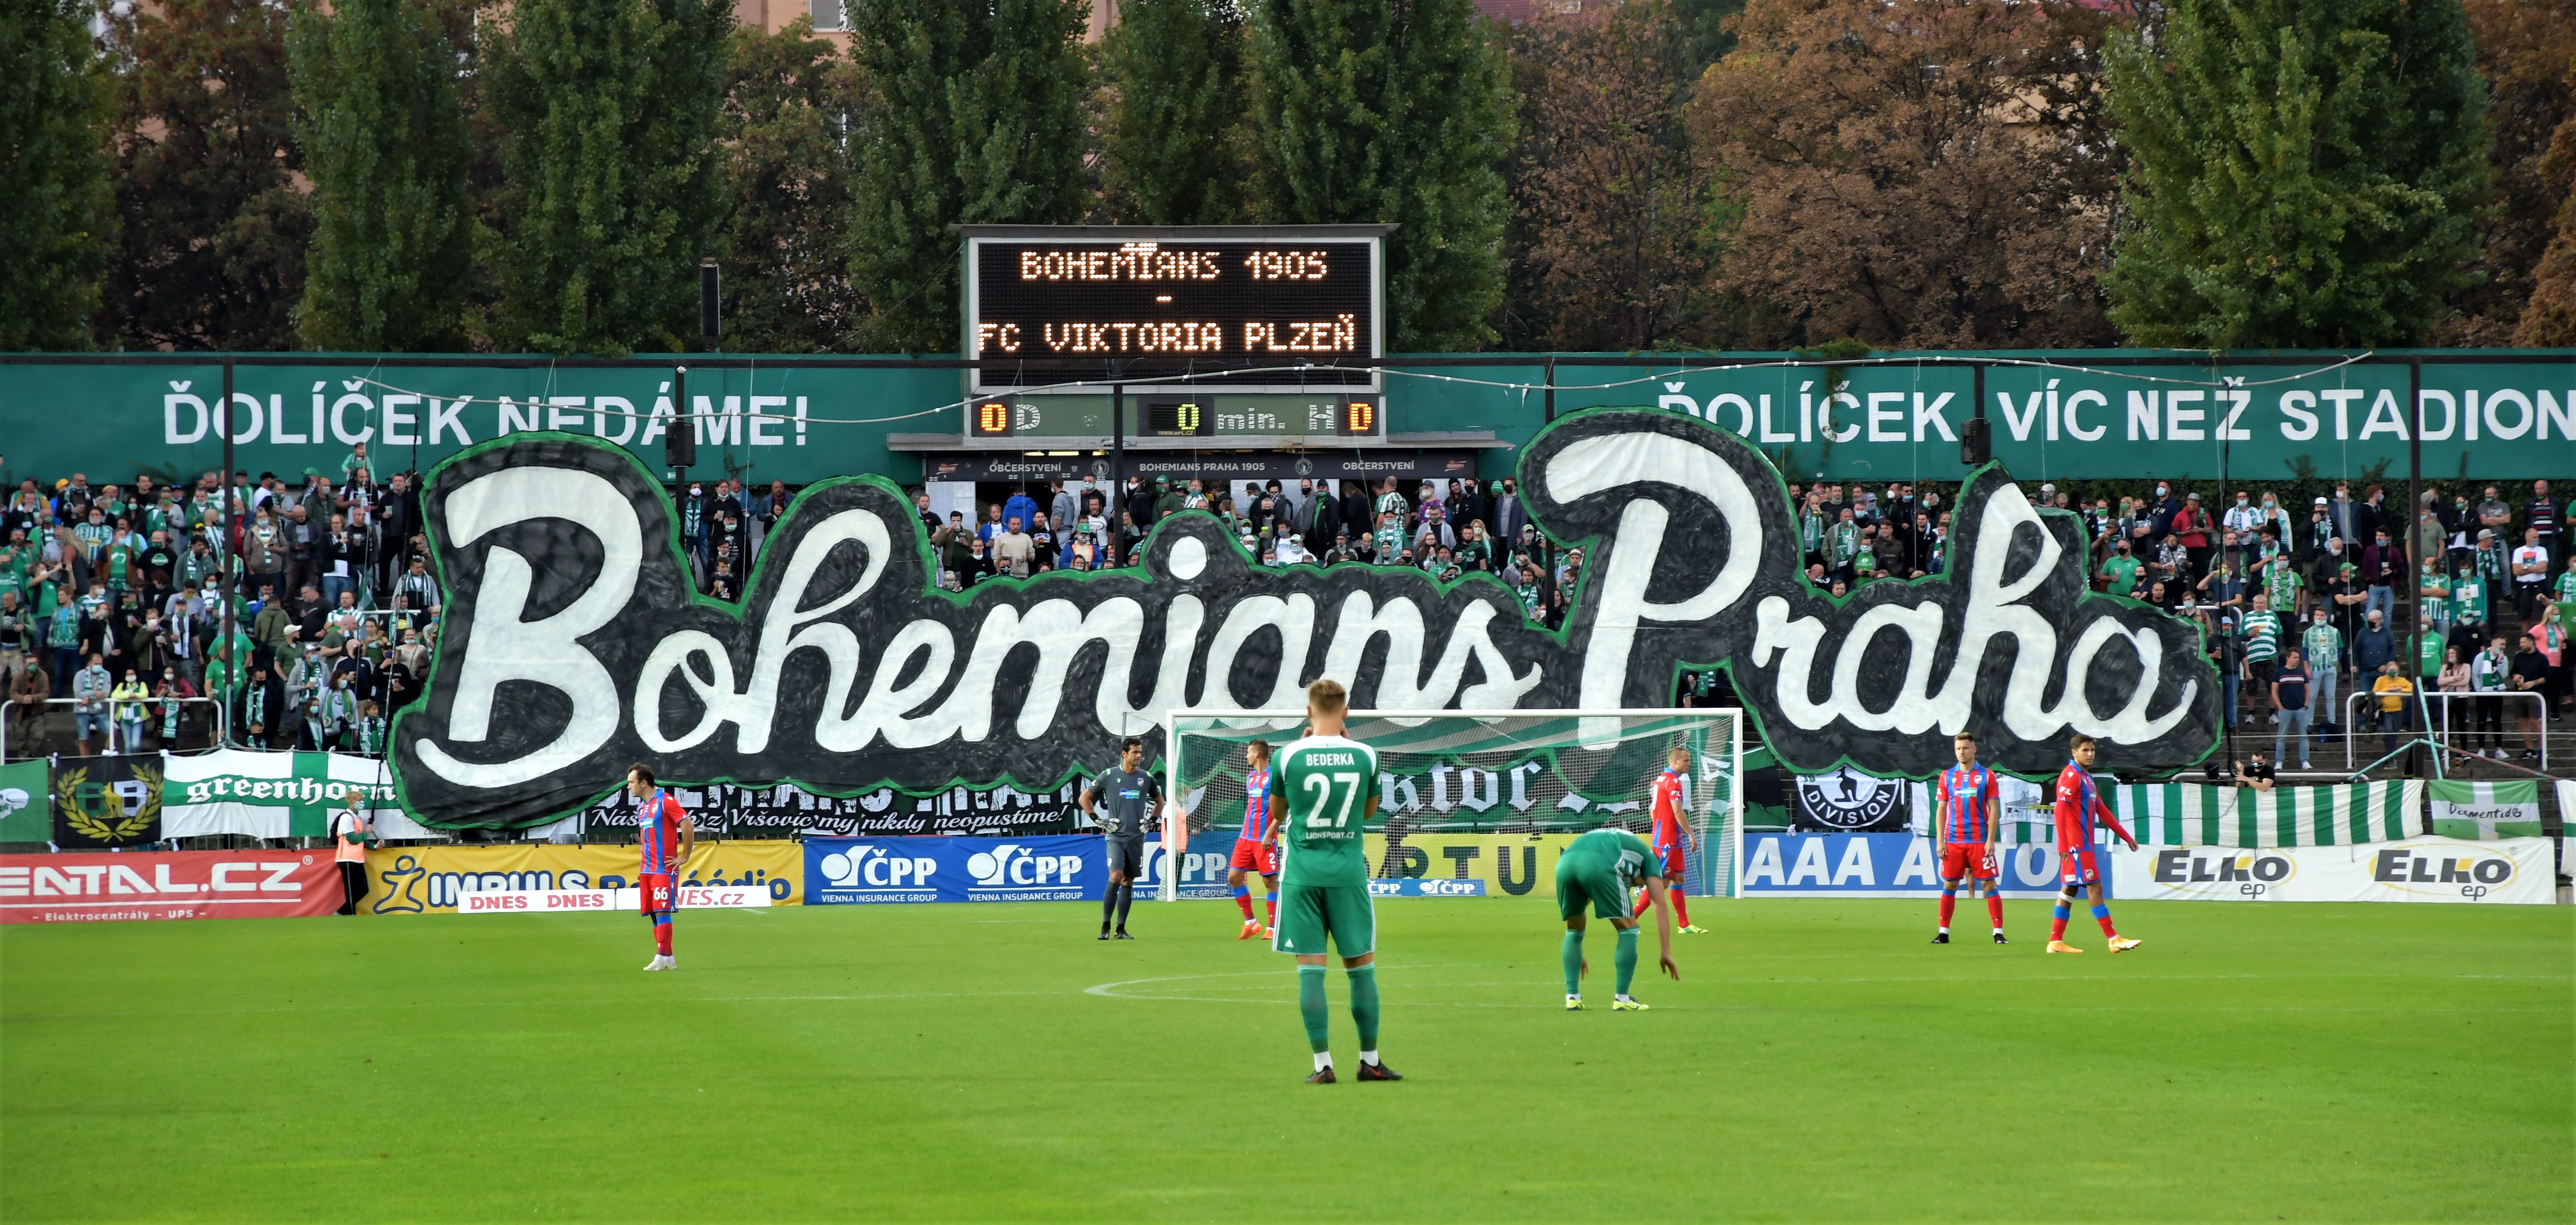 Bohemians Praha 1905 – FC Viktoria Plzeň 1:4